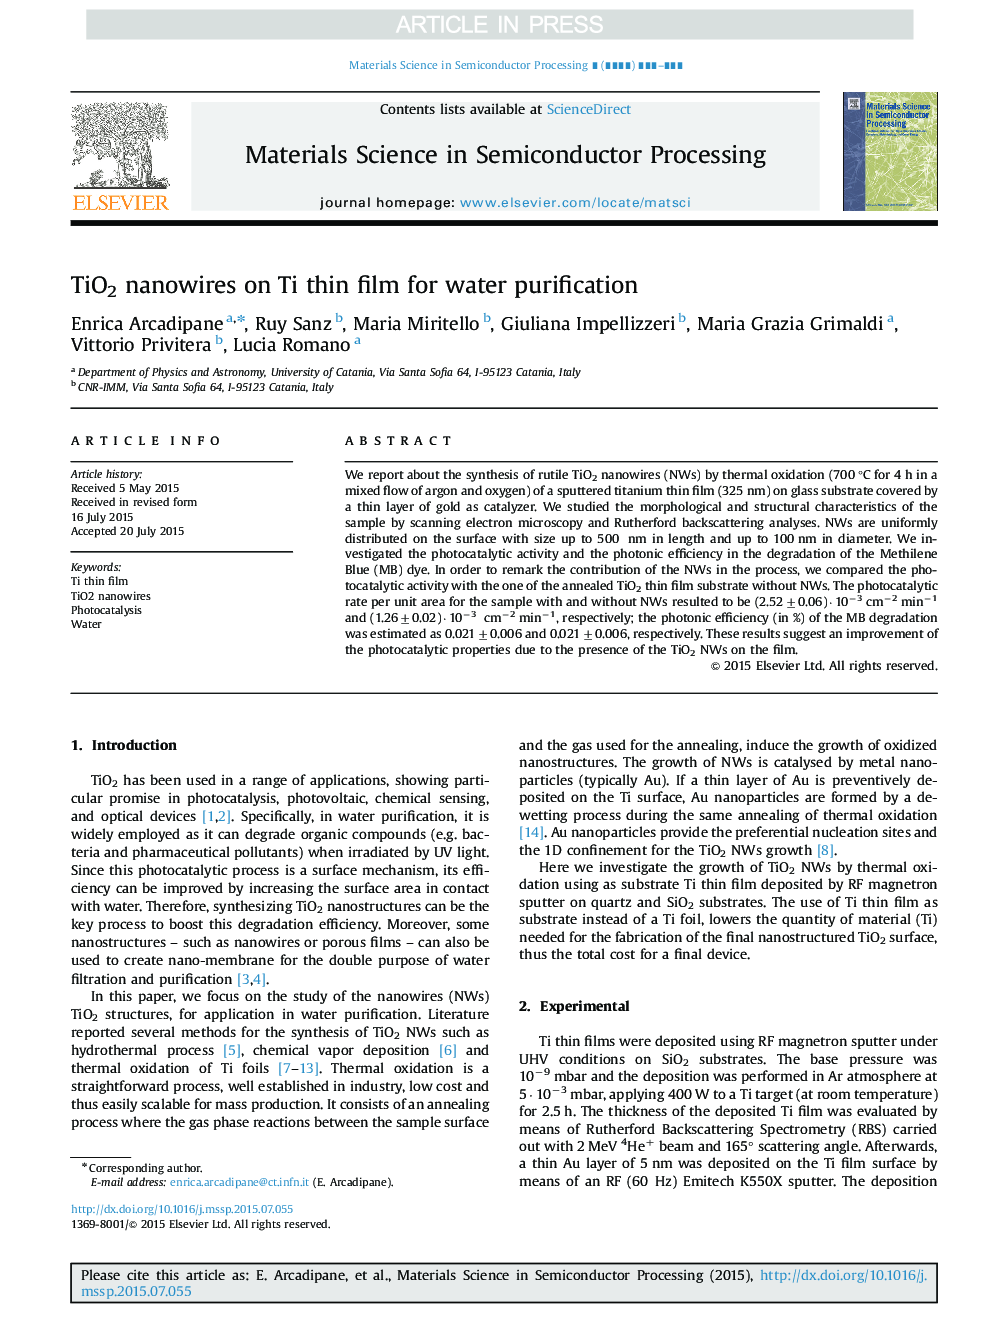 TiO2 nanowires on Ti thin film for water purification